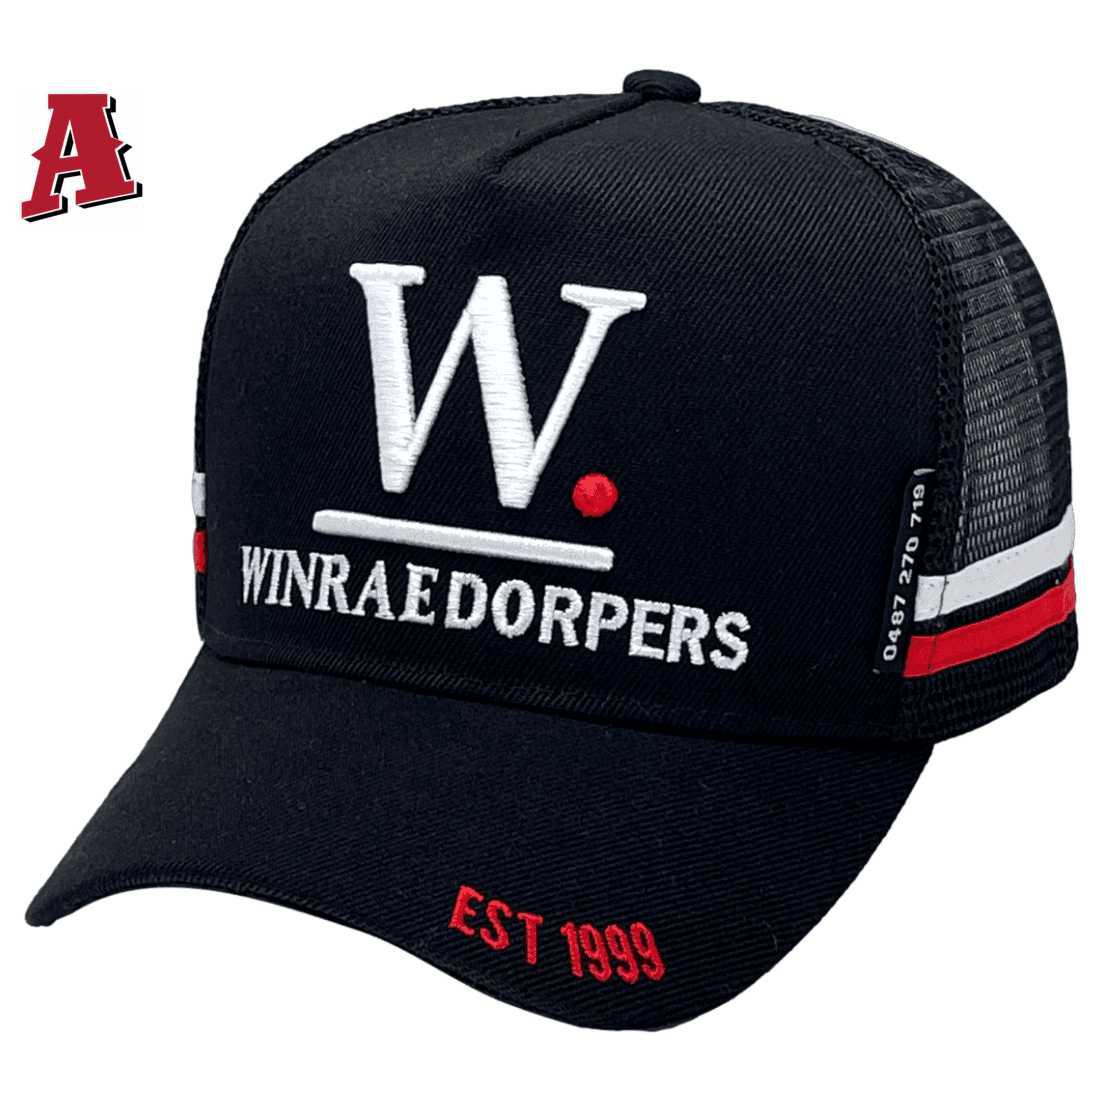 Winrae Dorpers Bundarra NSW HP Midrange Aussie Trucker Hats with Australian Head Fit Crown and Double Side Bands